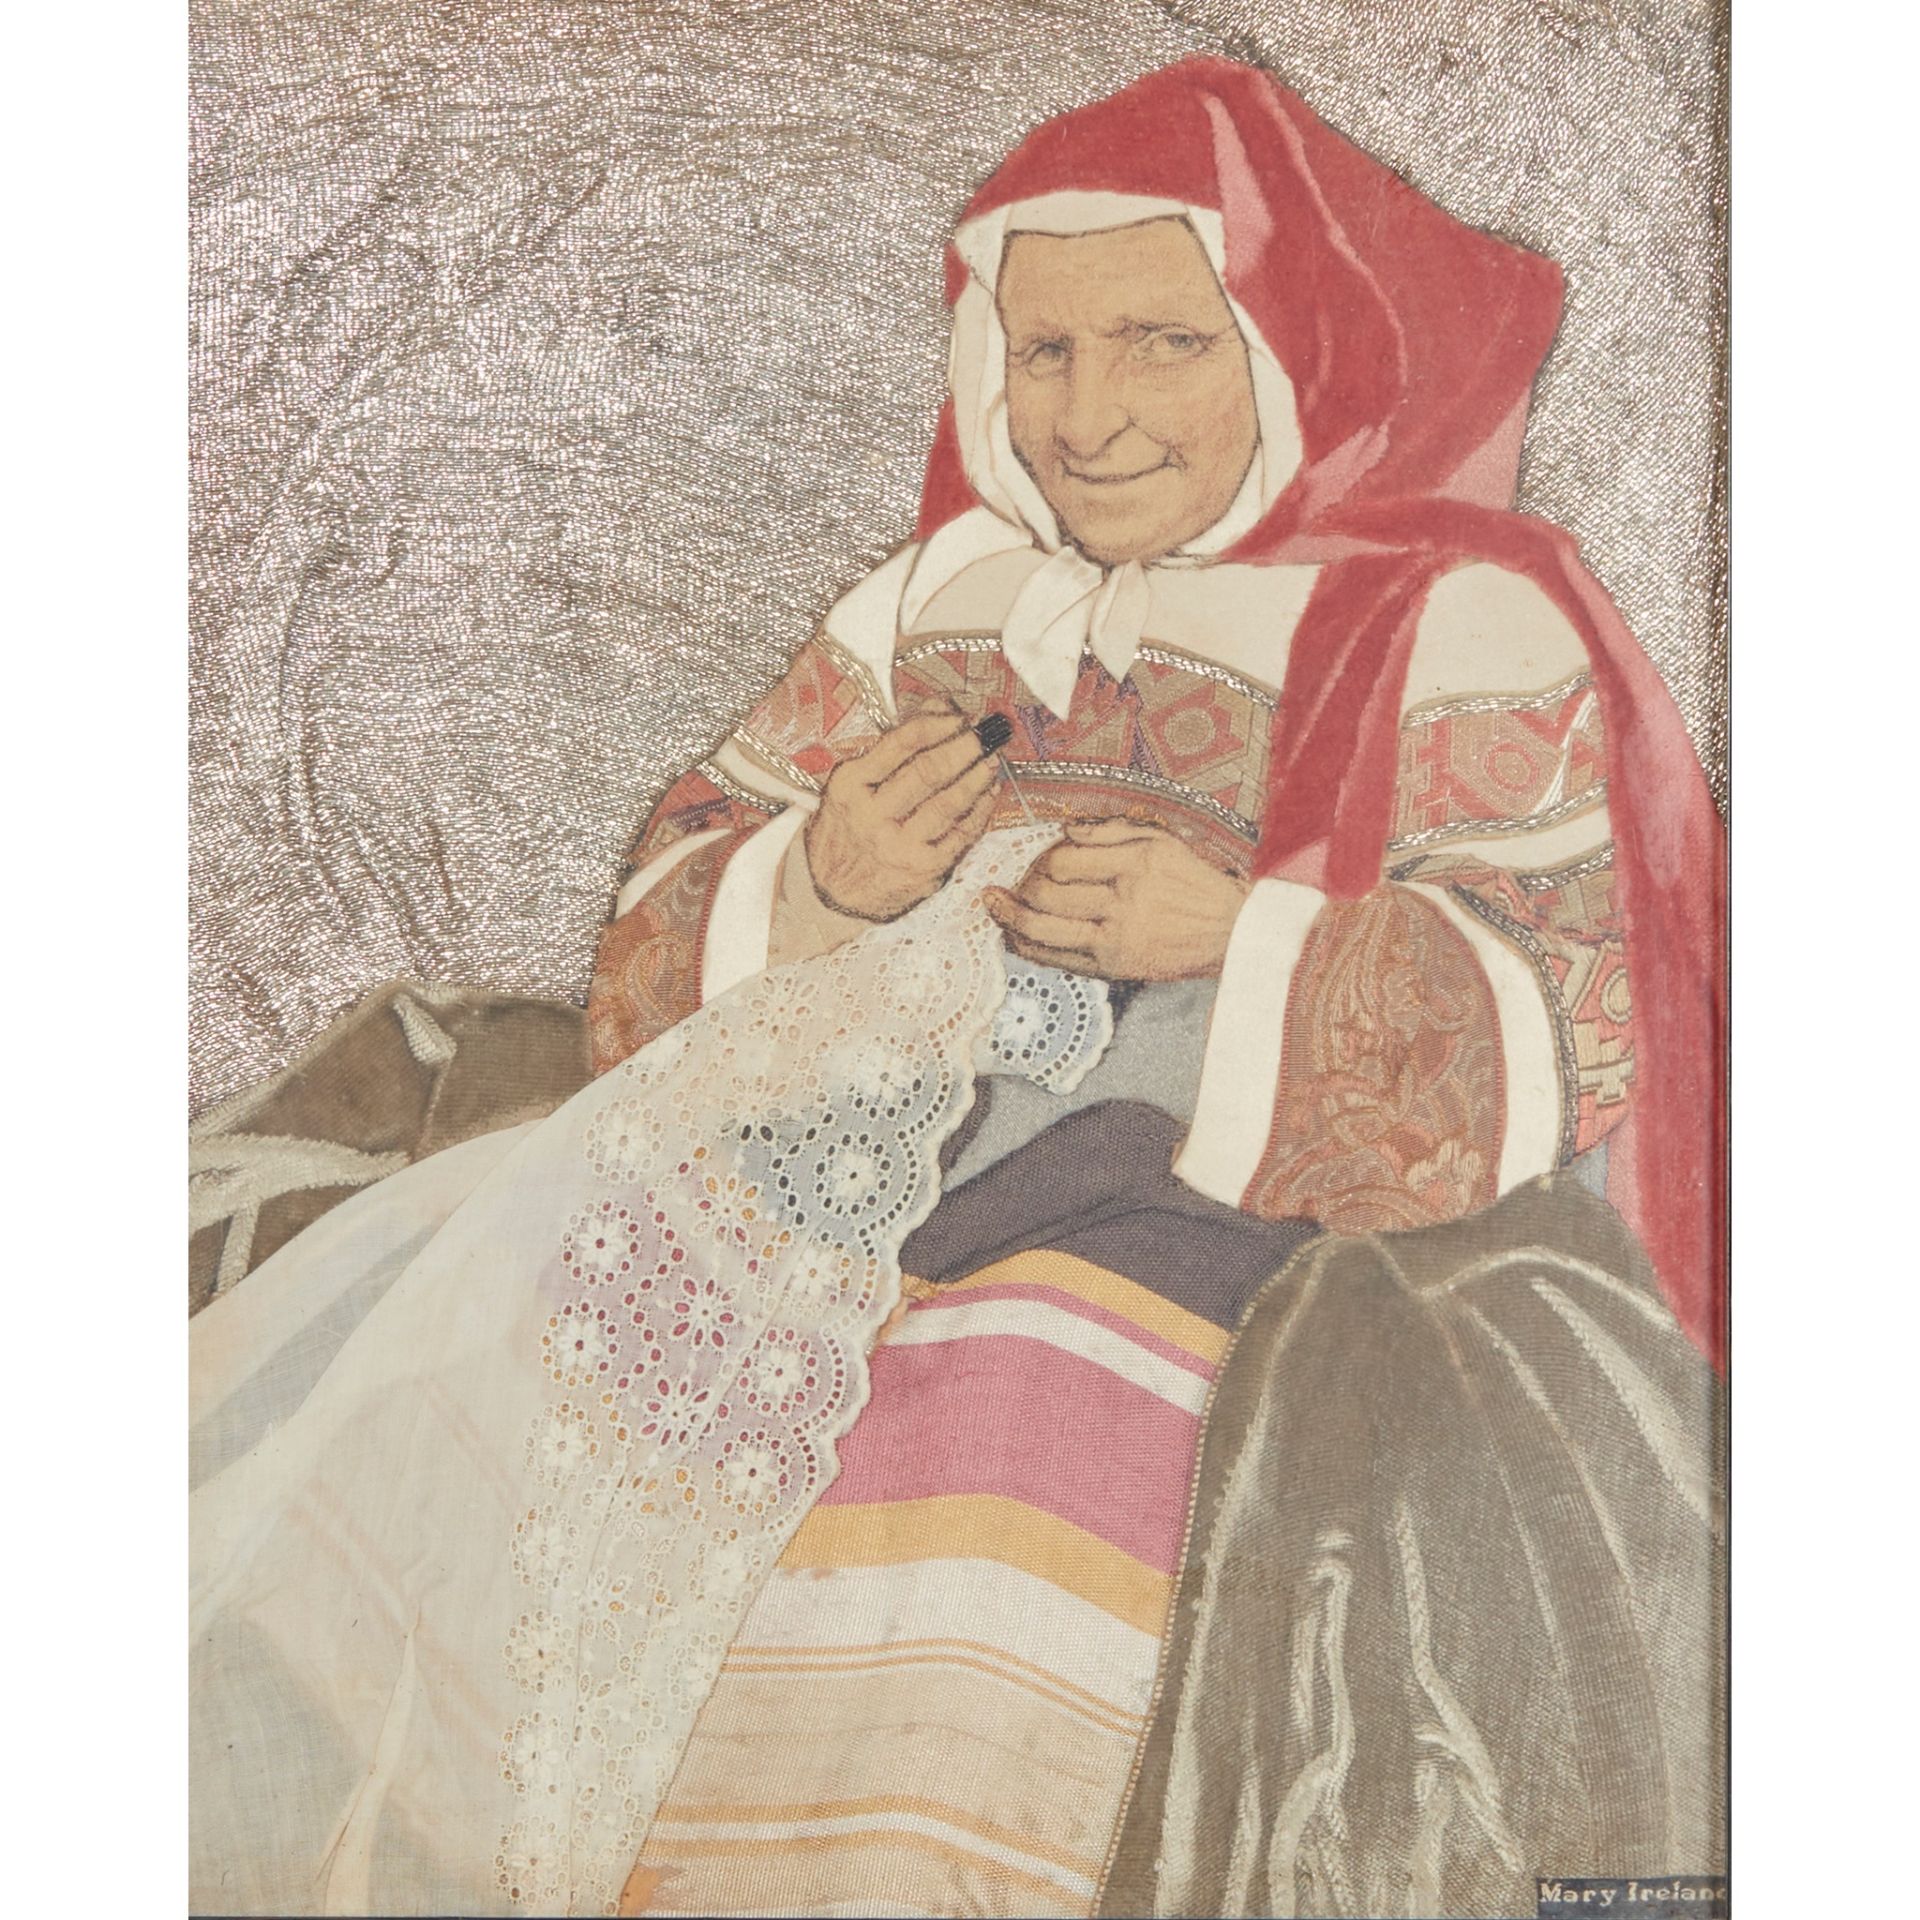 MARY IRELAND (1891-C.1980) ‘OLD WOMAN SEWING’, CIRCA 1935